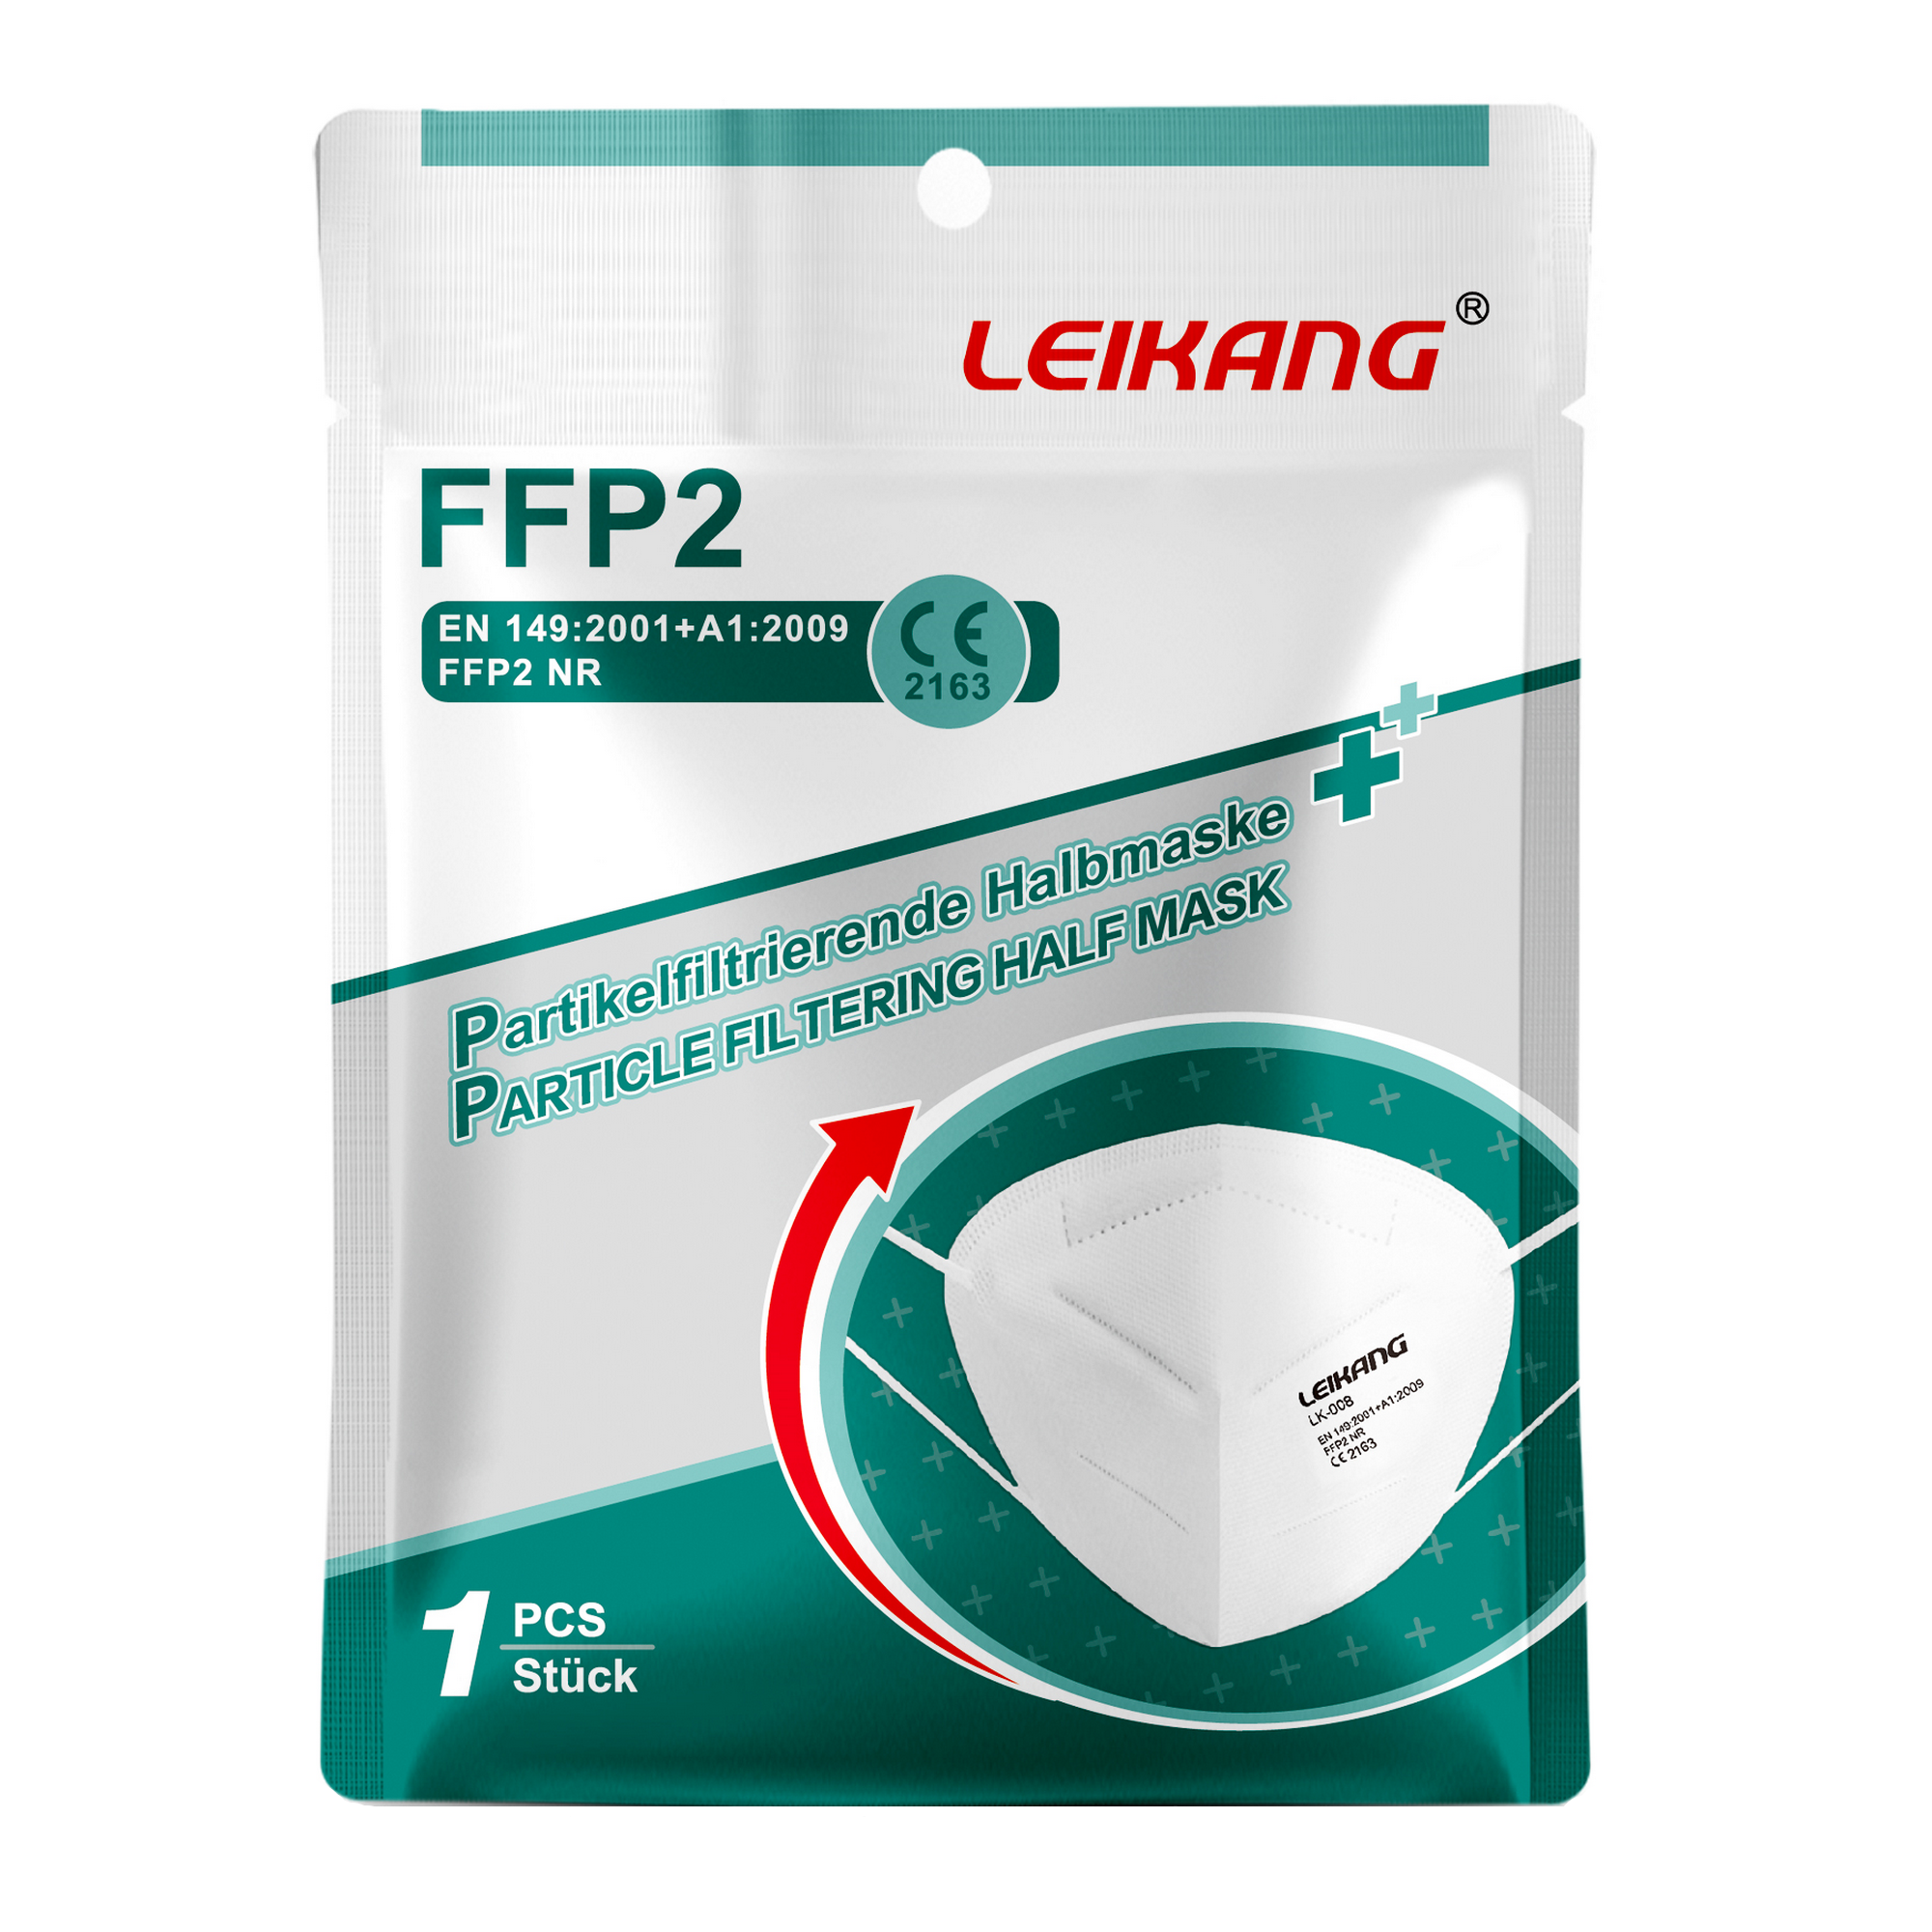 FFP2-Atemschutzmaske, 1 Stück + product picture